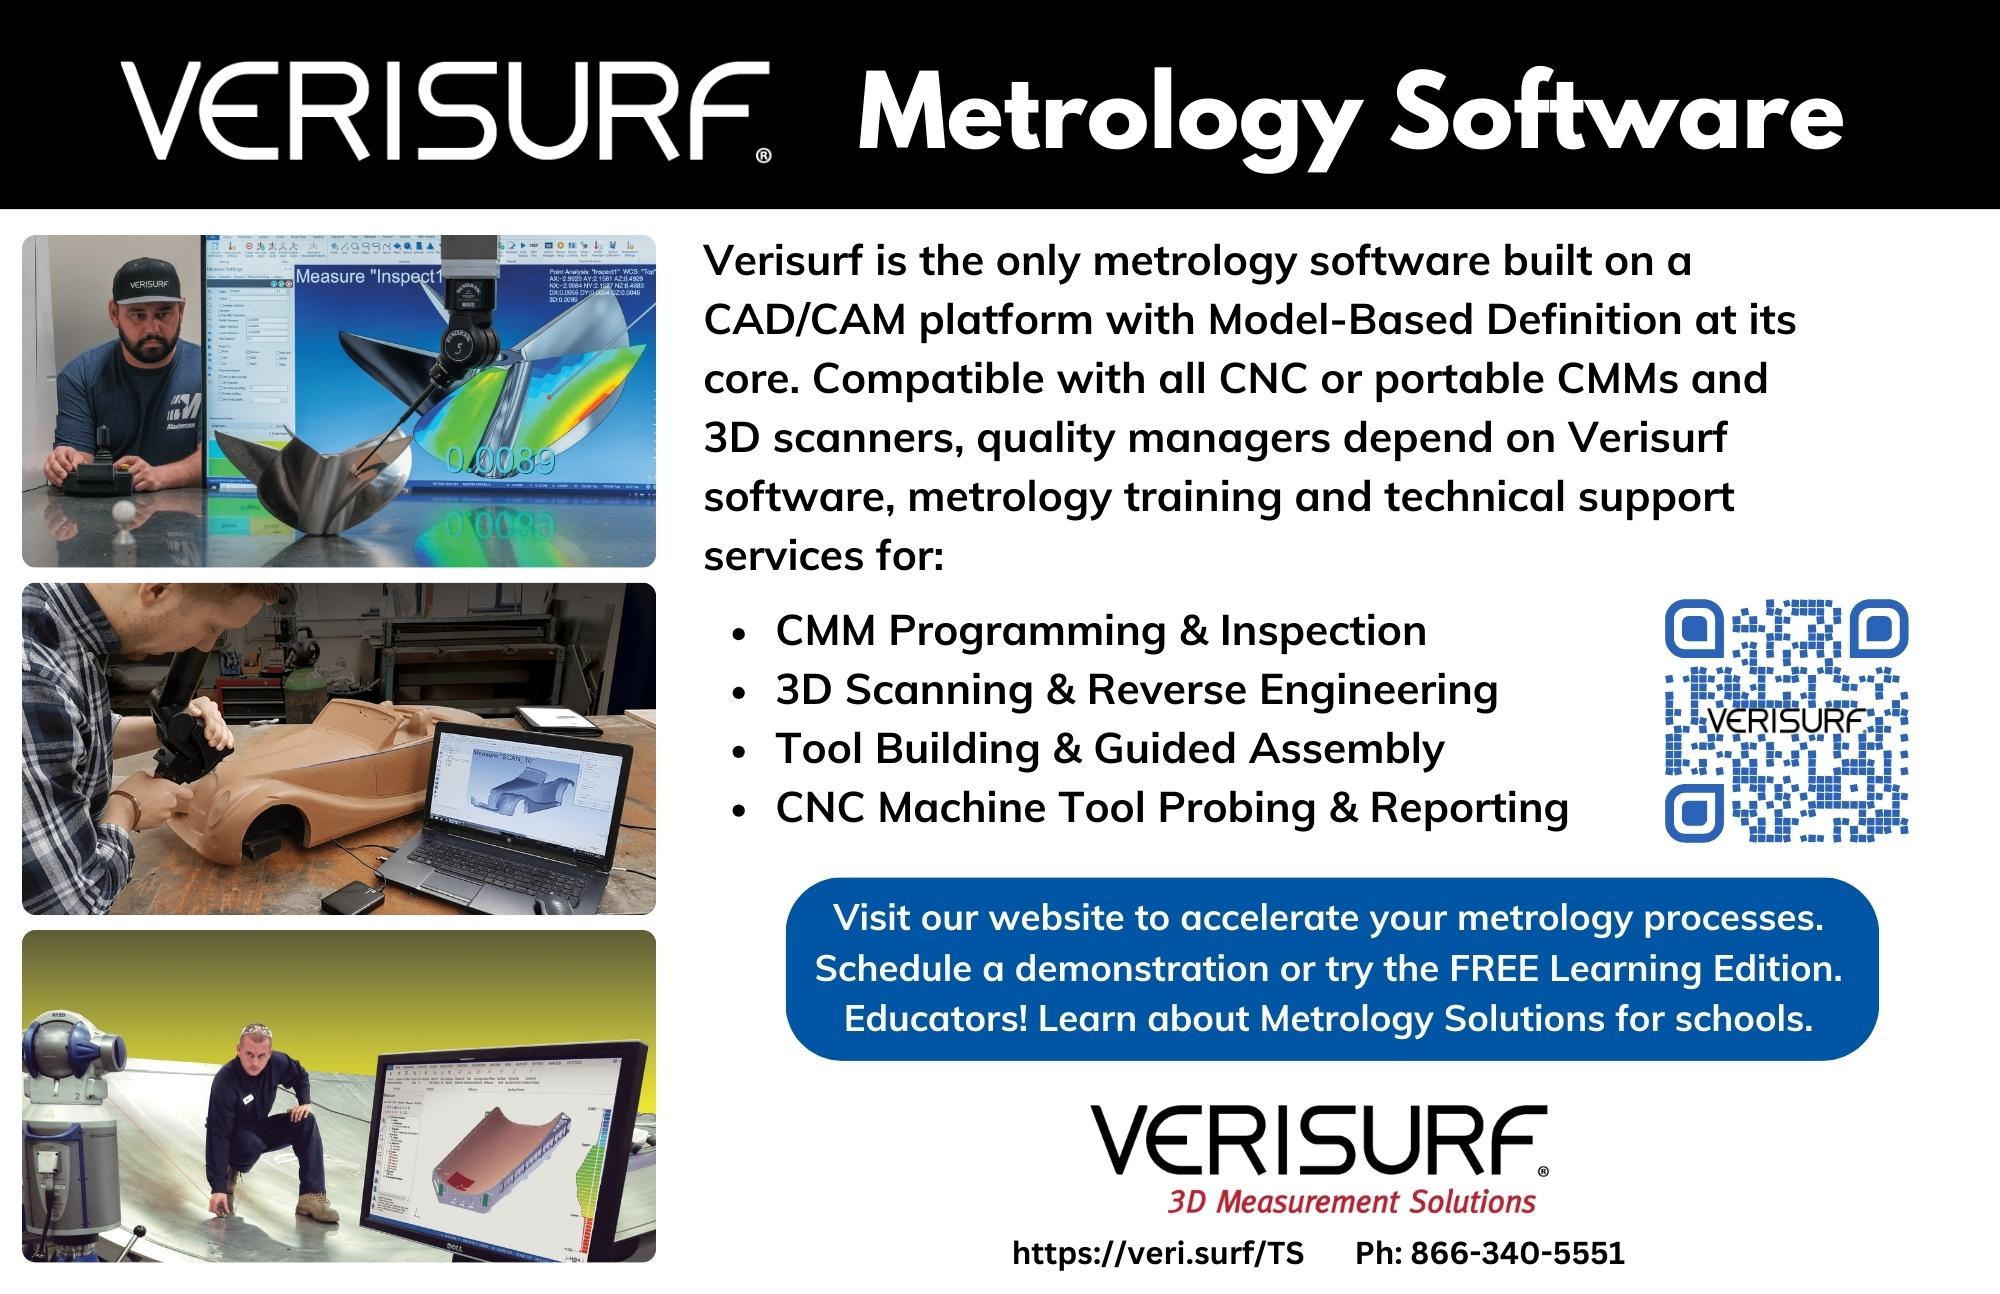 3D Metrology Software, Training and CMMsVerisurf Solutions